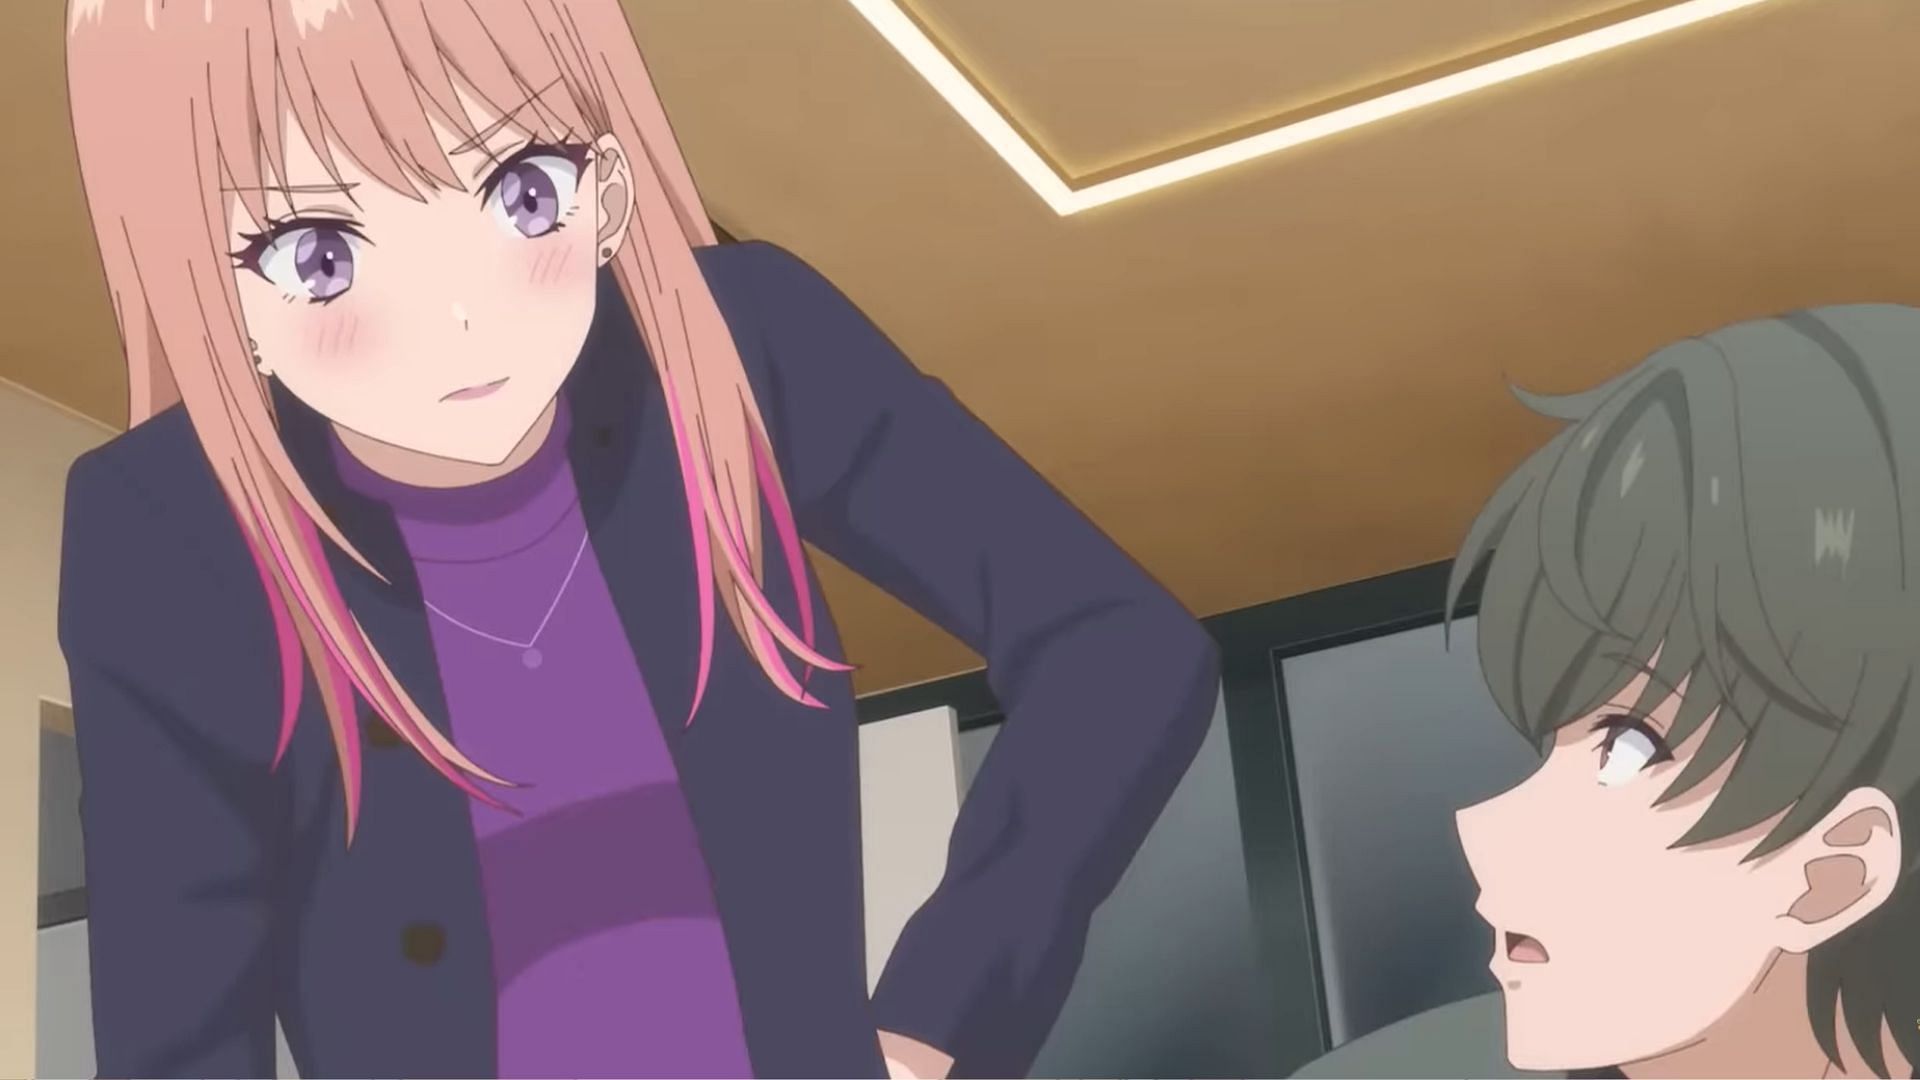 Nikoru and Shuugo as seen in the anime series (Image via ENGI)